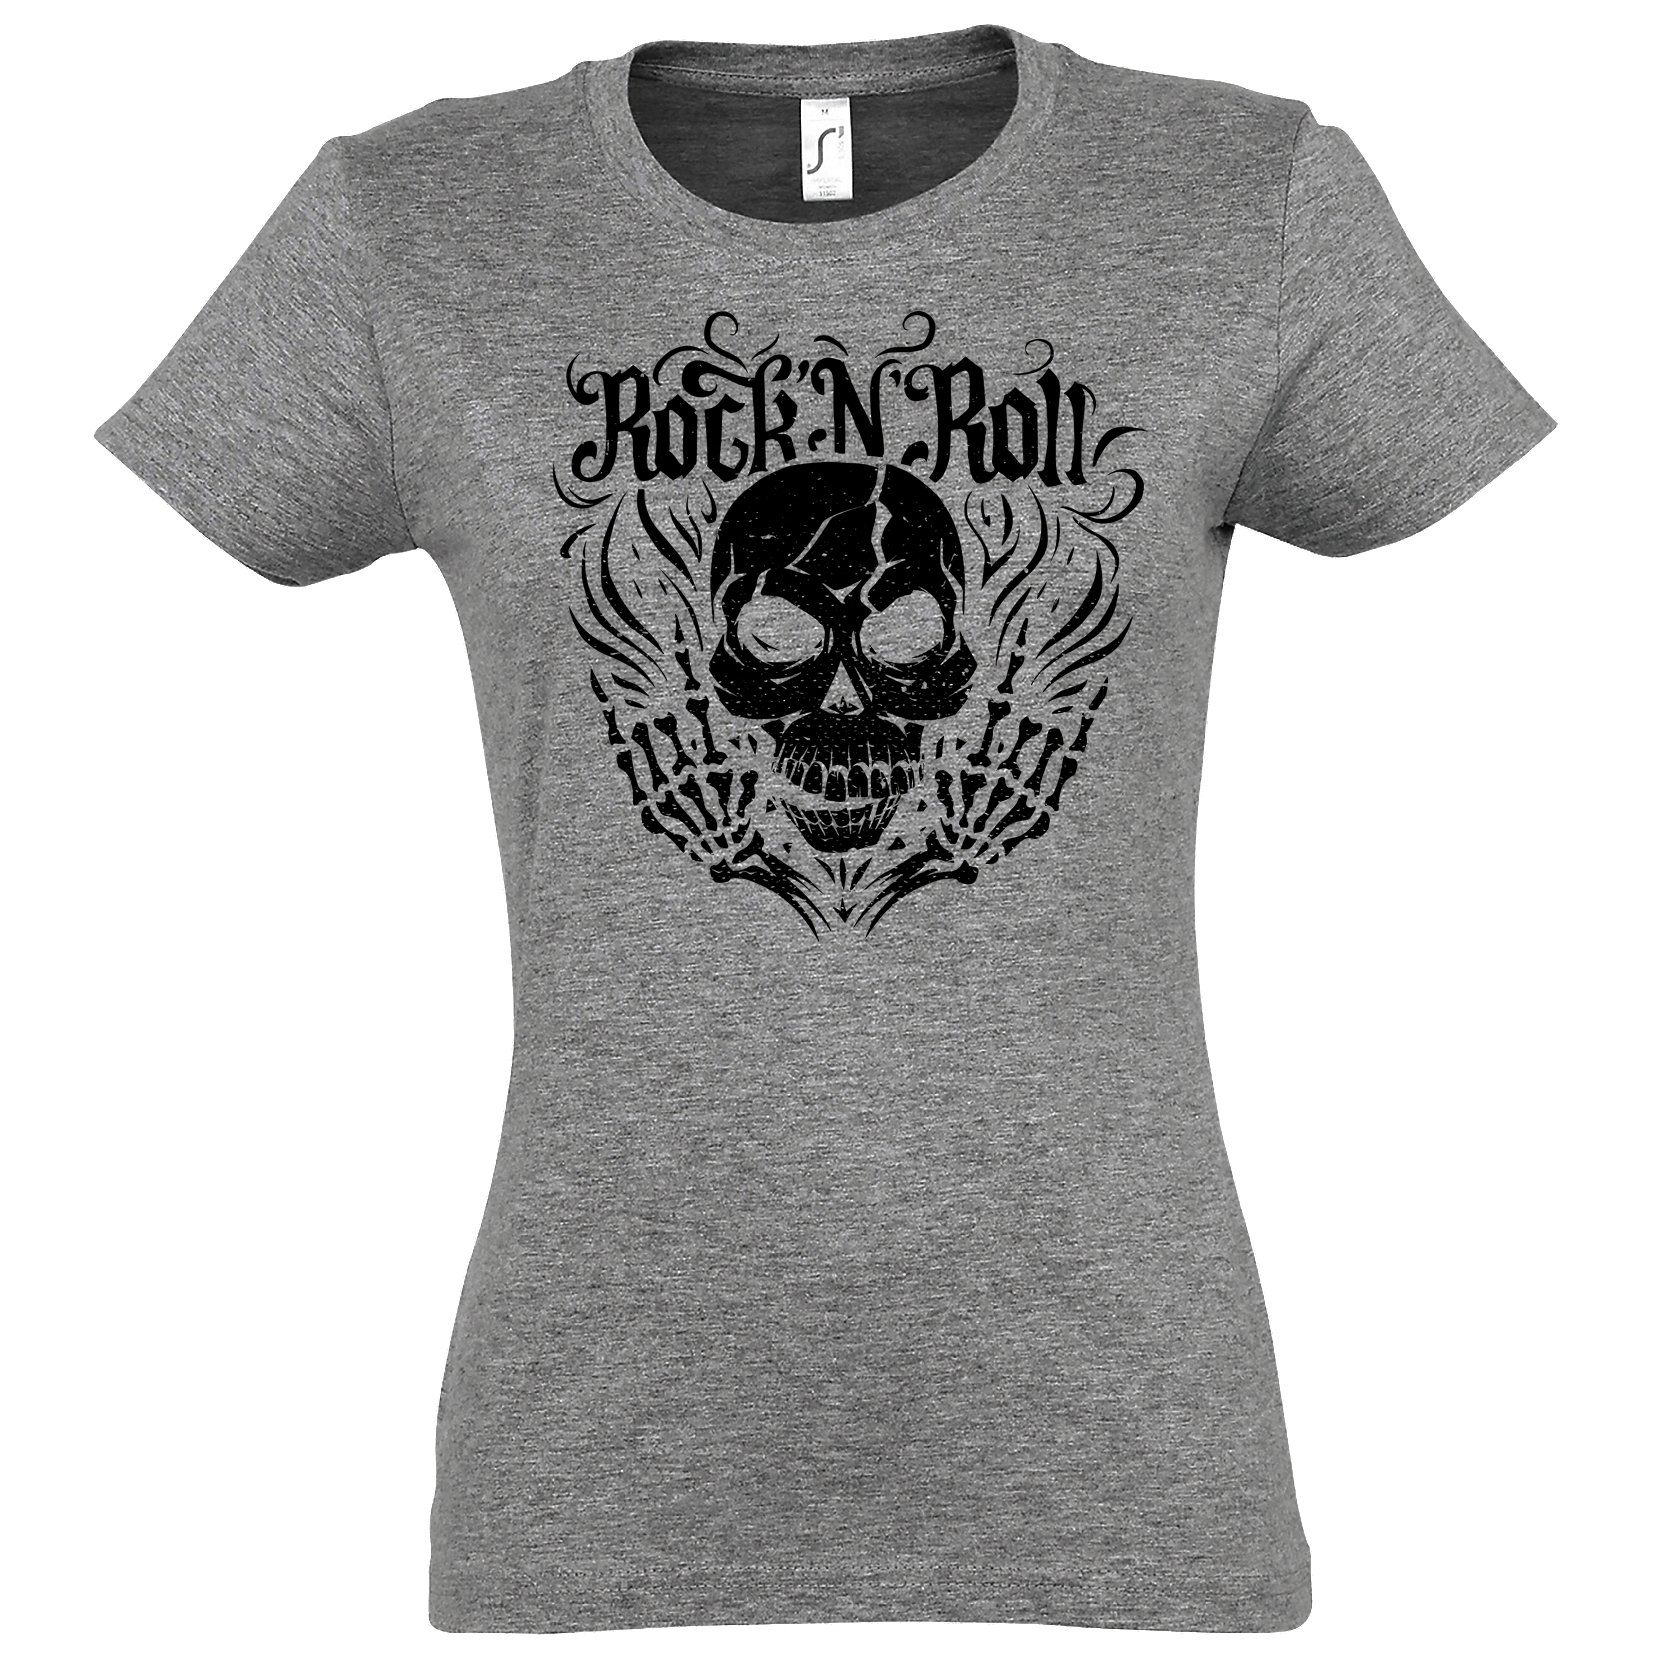 Youth Designz T-Shirt Skull Rock and Roll Damen Shirt im Fun-Look Mit modischem Print